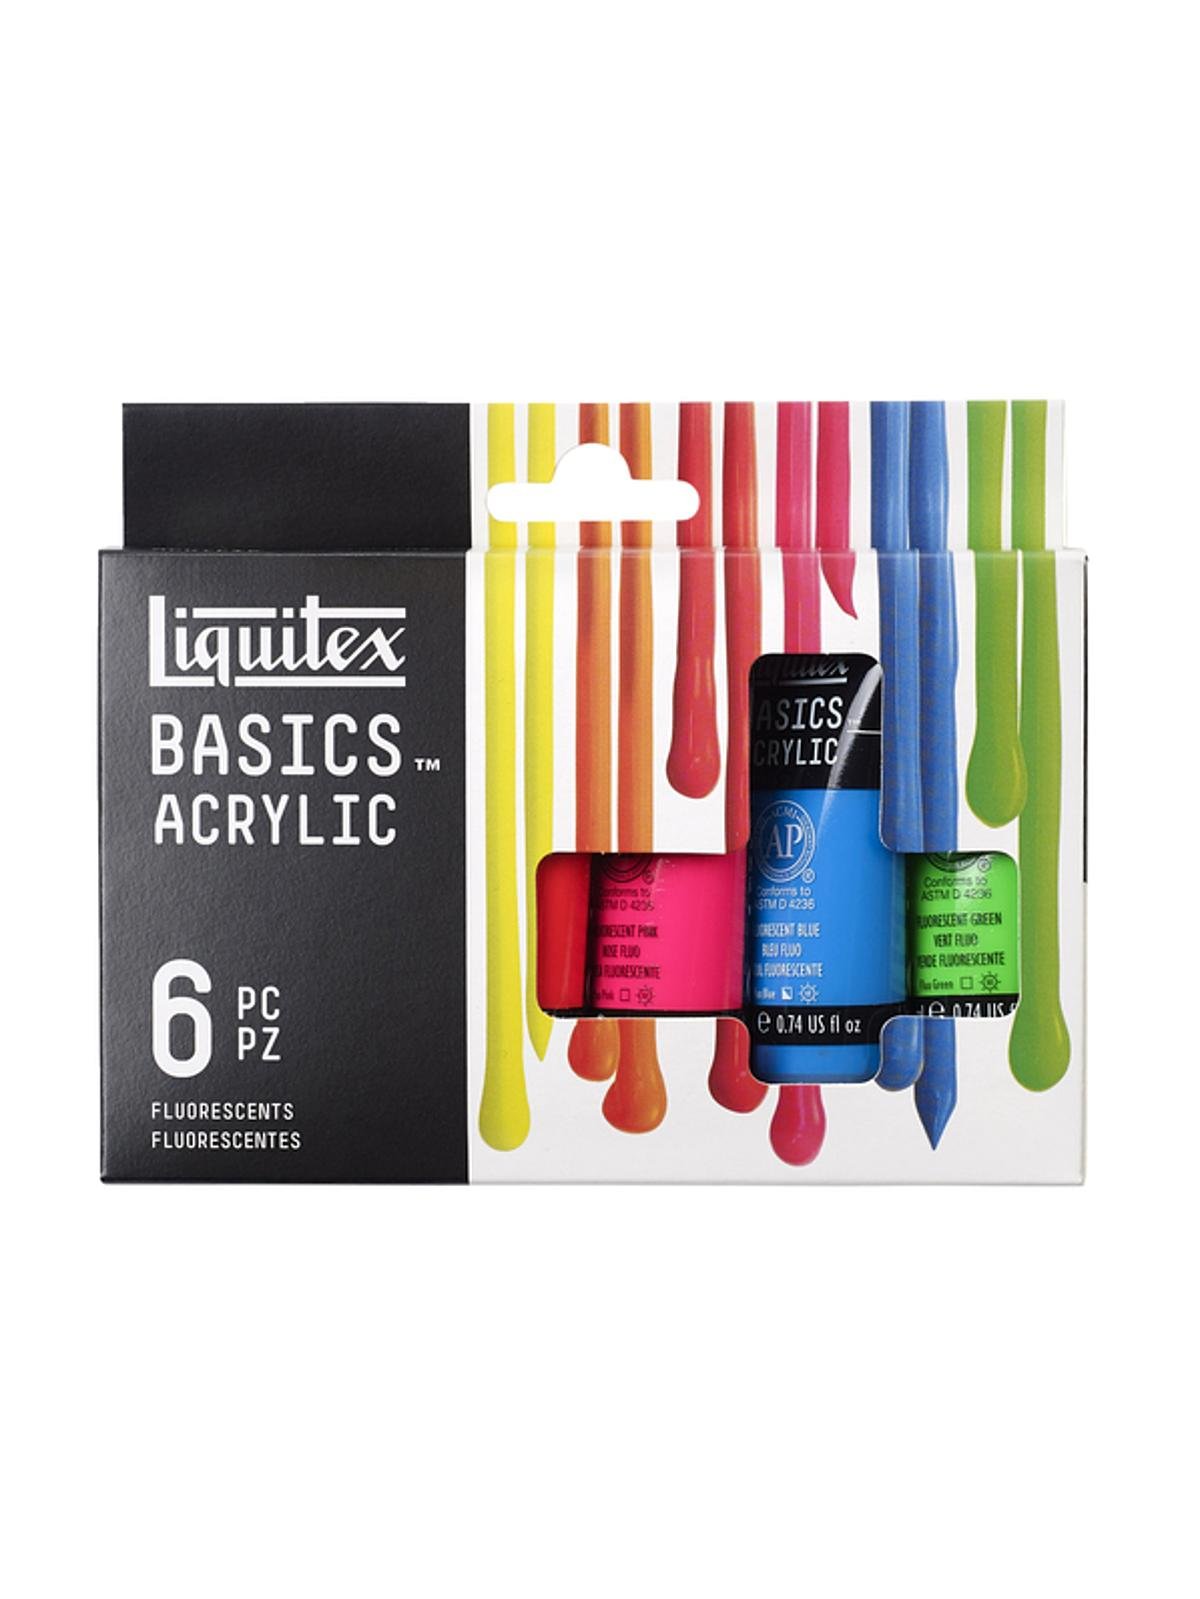 Liquitex Basics Acrylic Paint Set of 48 22ml